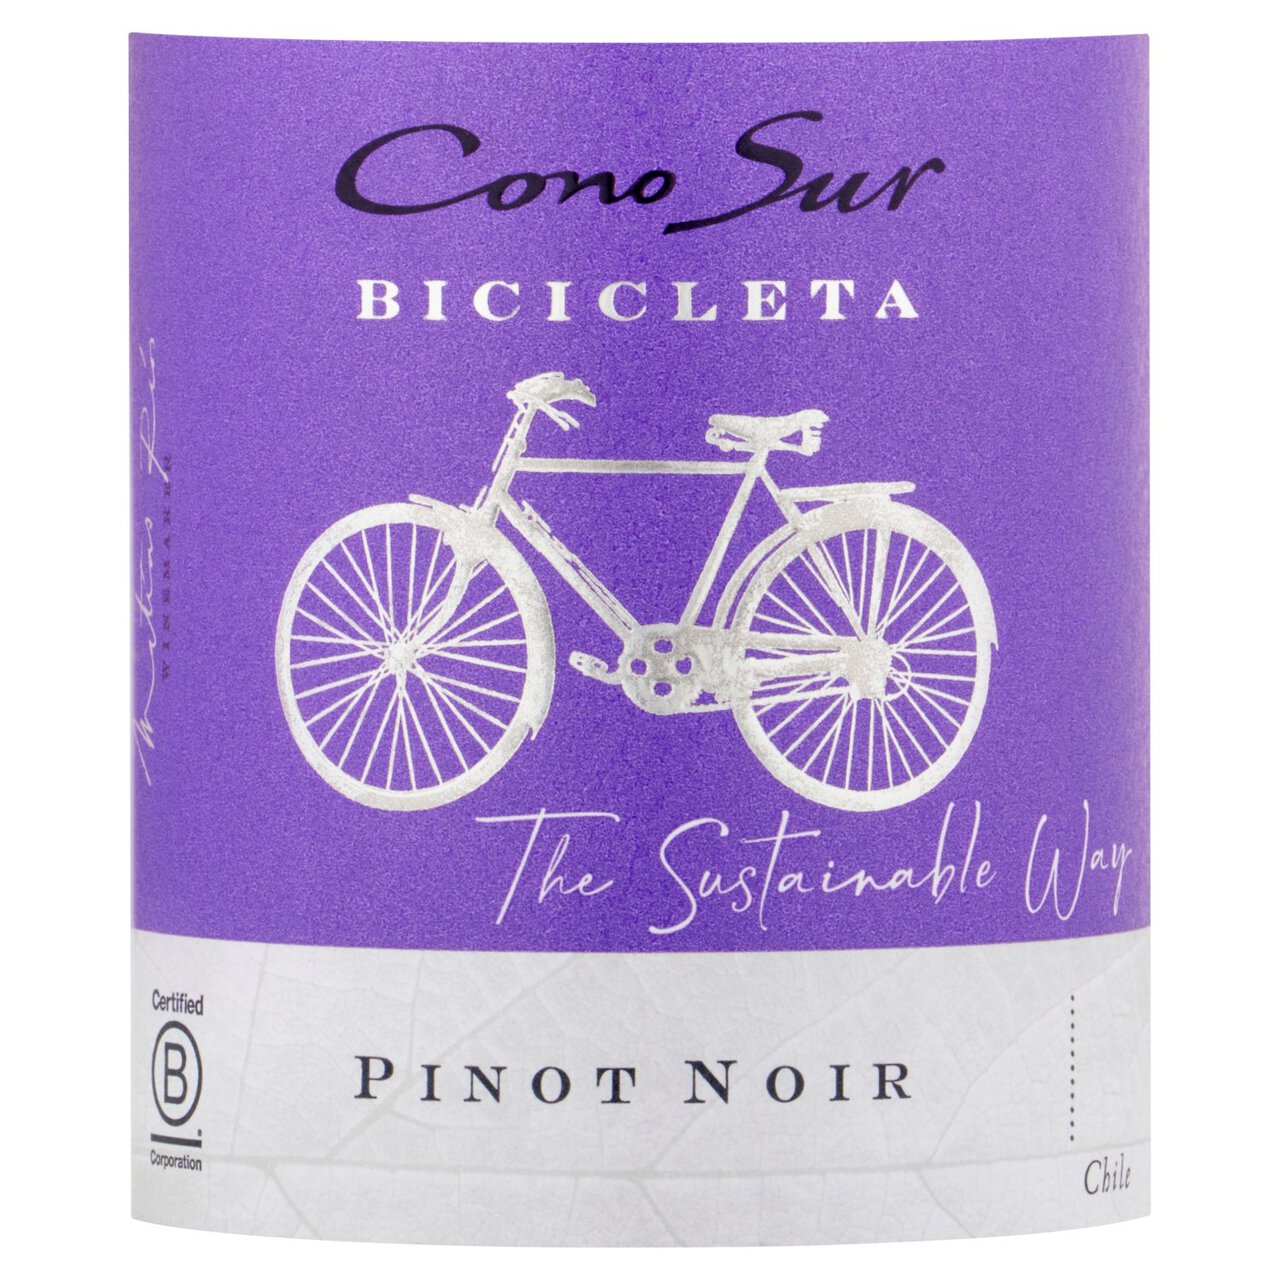 Cono Sur Bicicleta Pinot Noir 75cl